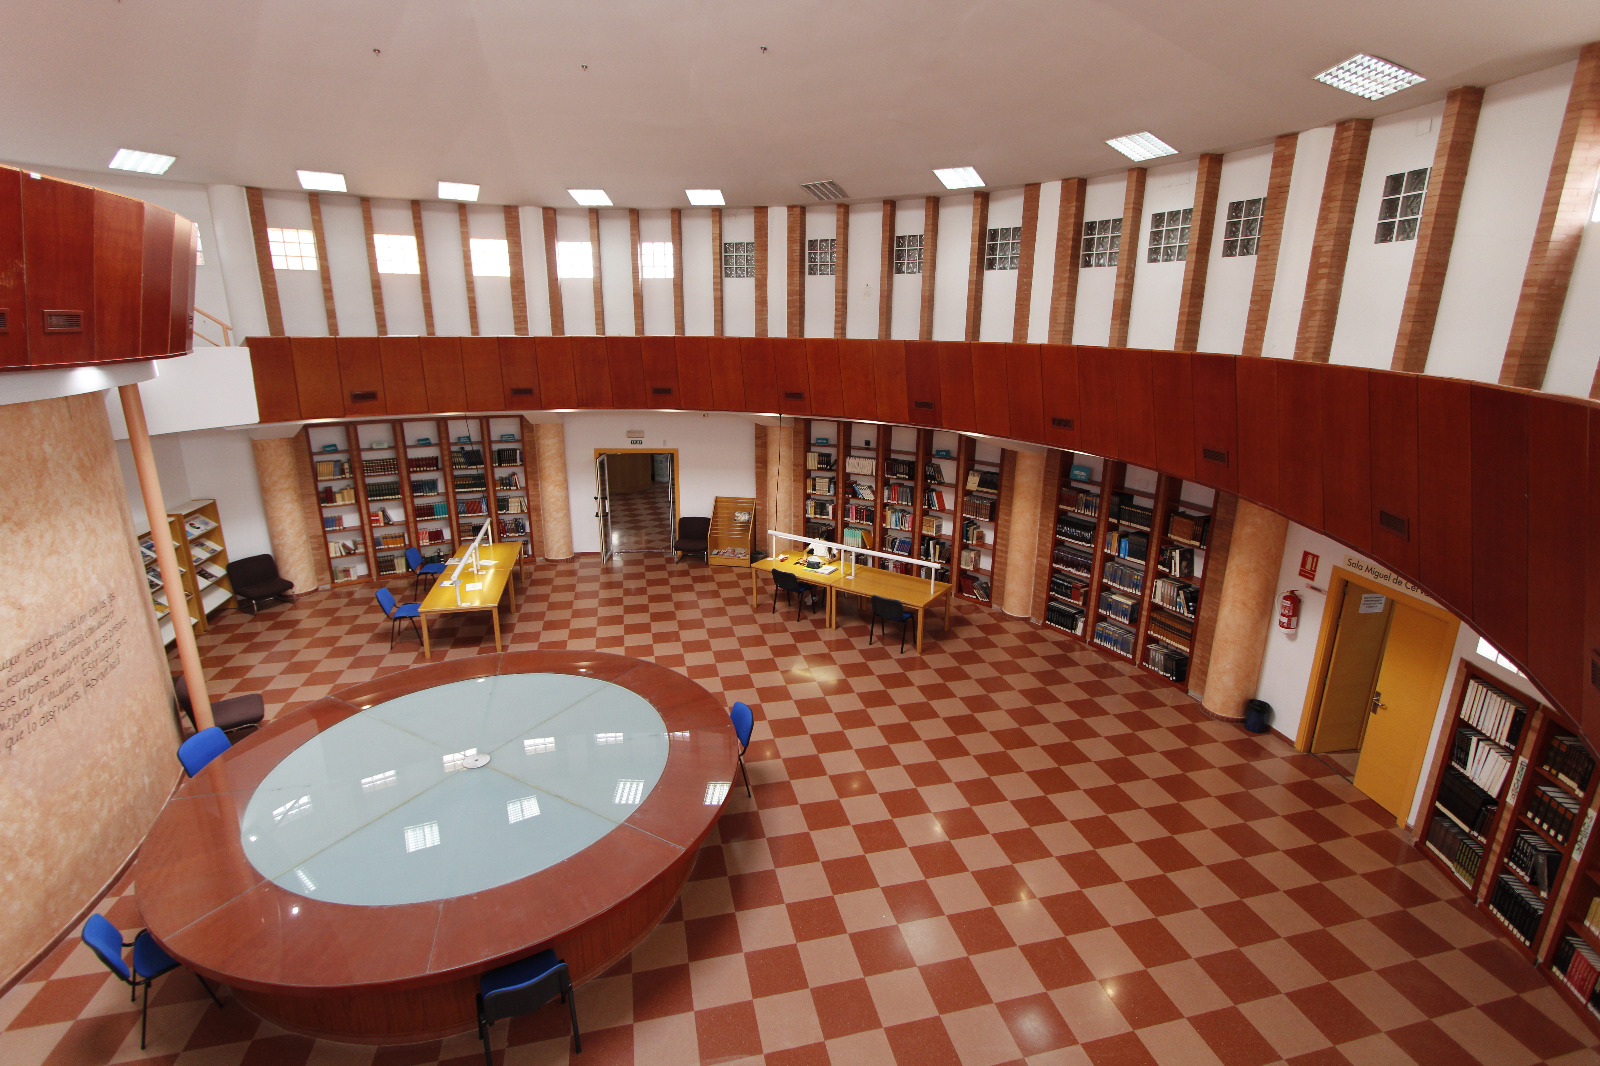 Sala de lectura de la biblioteca municipal